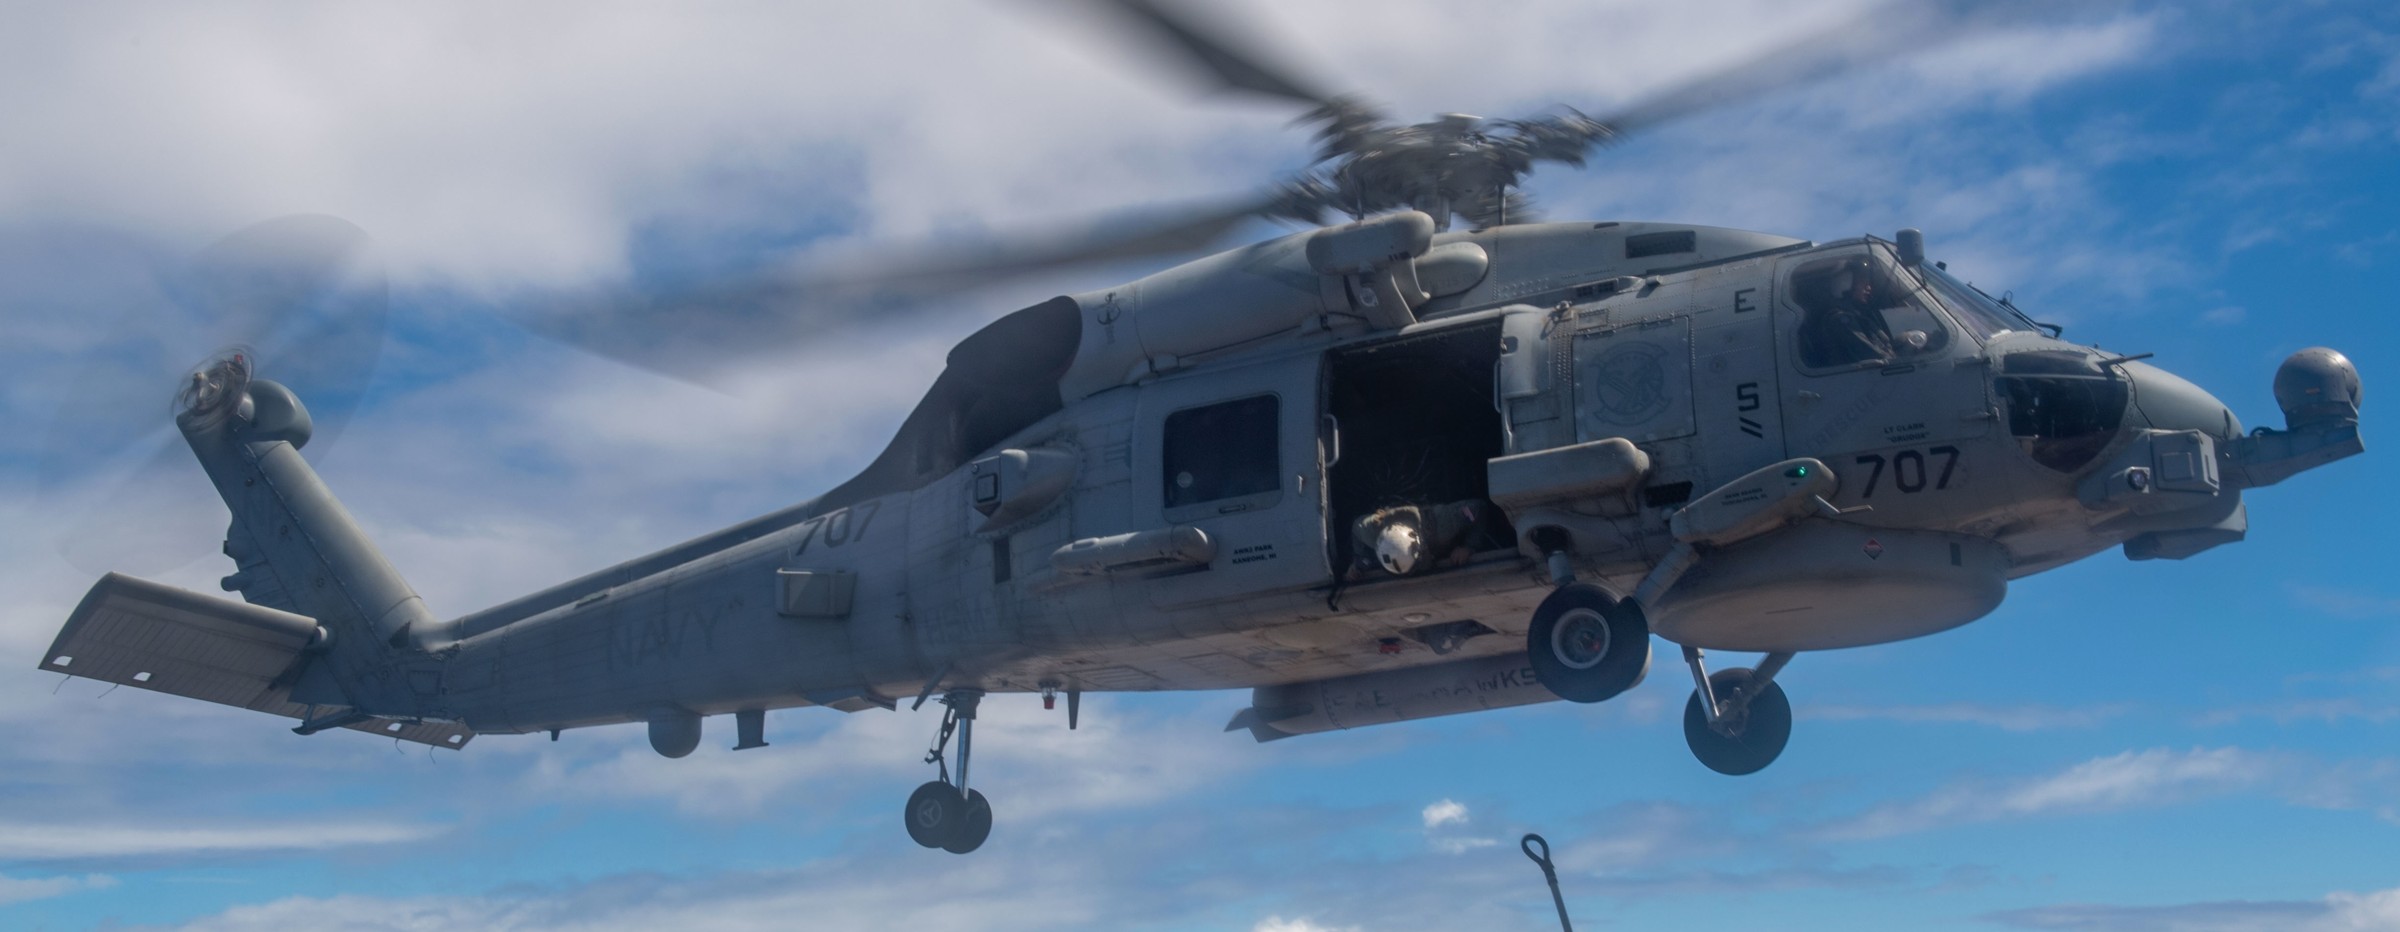 hsm-77 saberhawks helicopter maritime strike squadron mh-60r seahawk cg-54 uss antietam 49